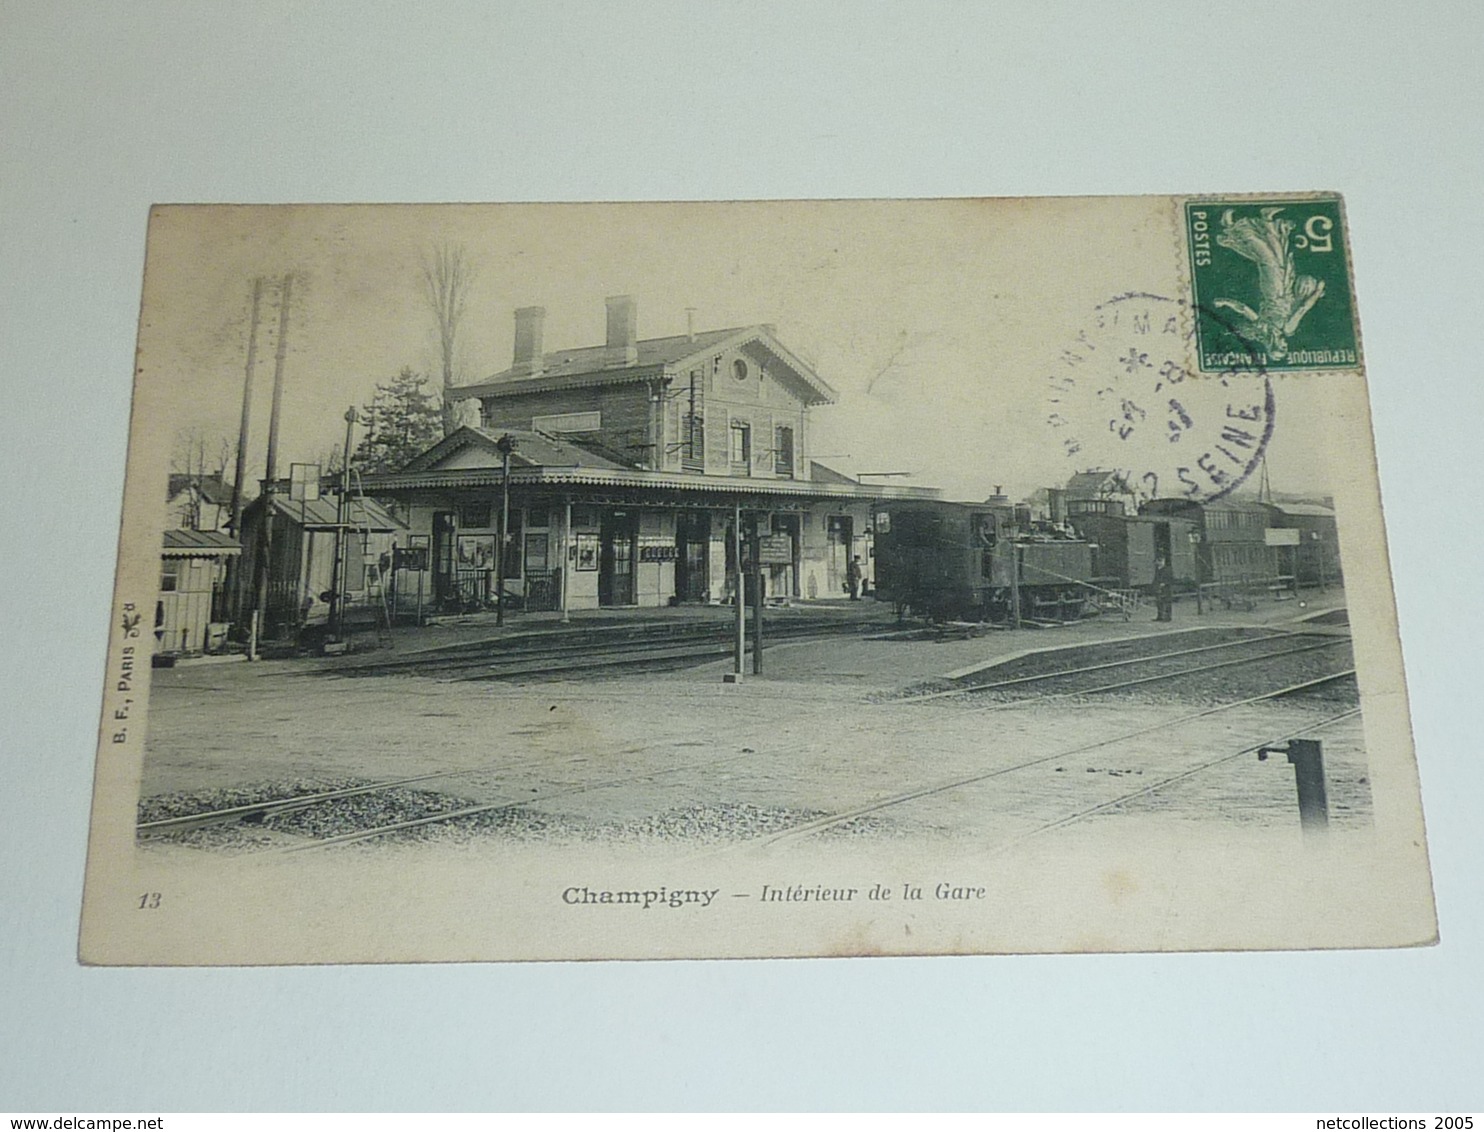 CHAMPIGNY - INTERIEUR DE LA GARE - LOCOMOTIVE ET WAGON A QUAI - 51 MARNE (AC) - Champigny